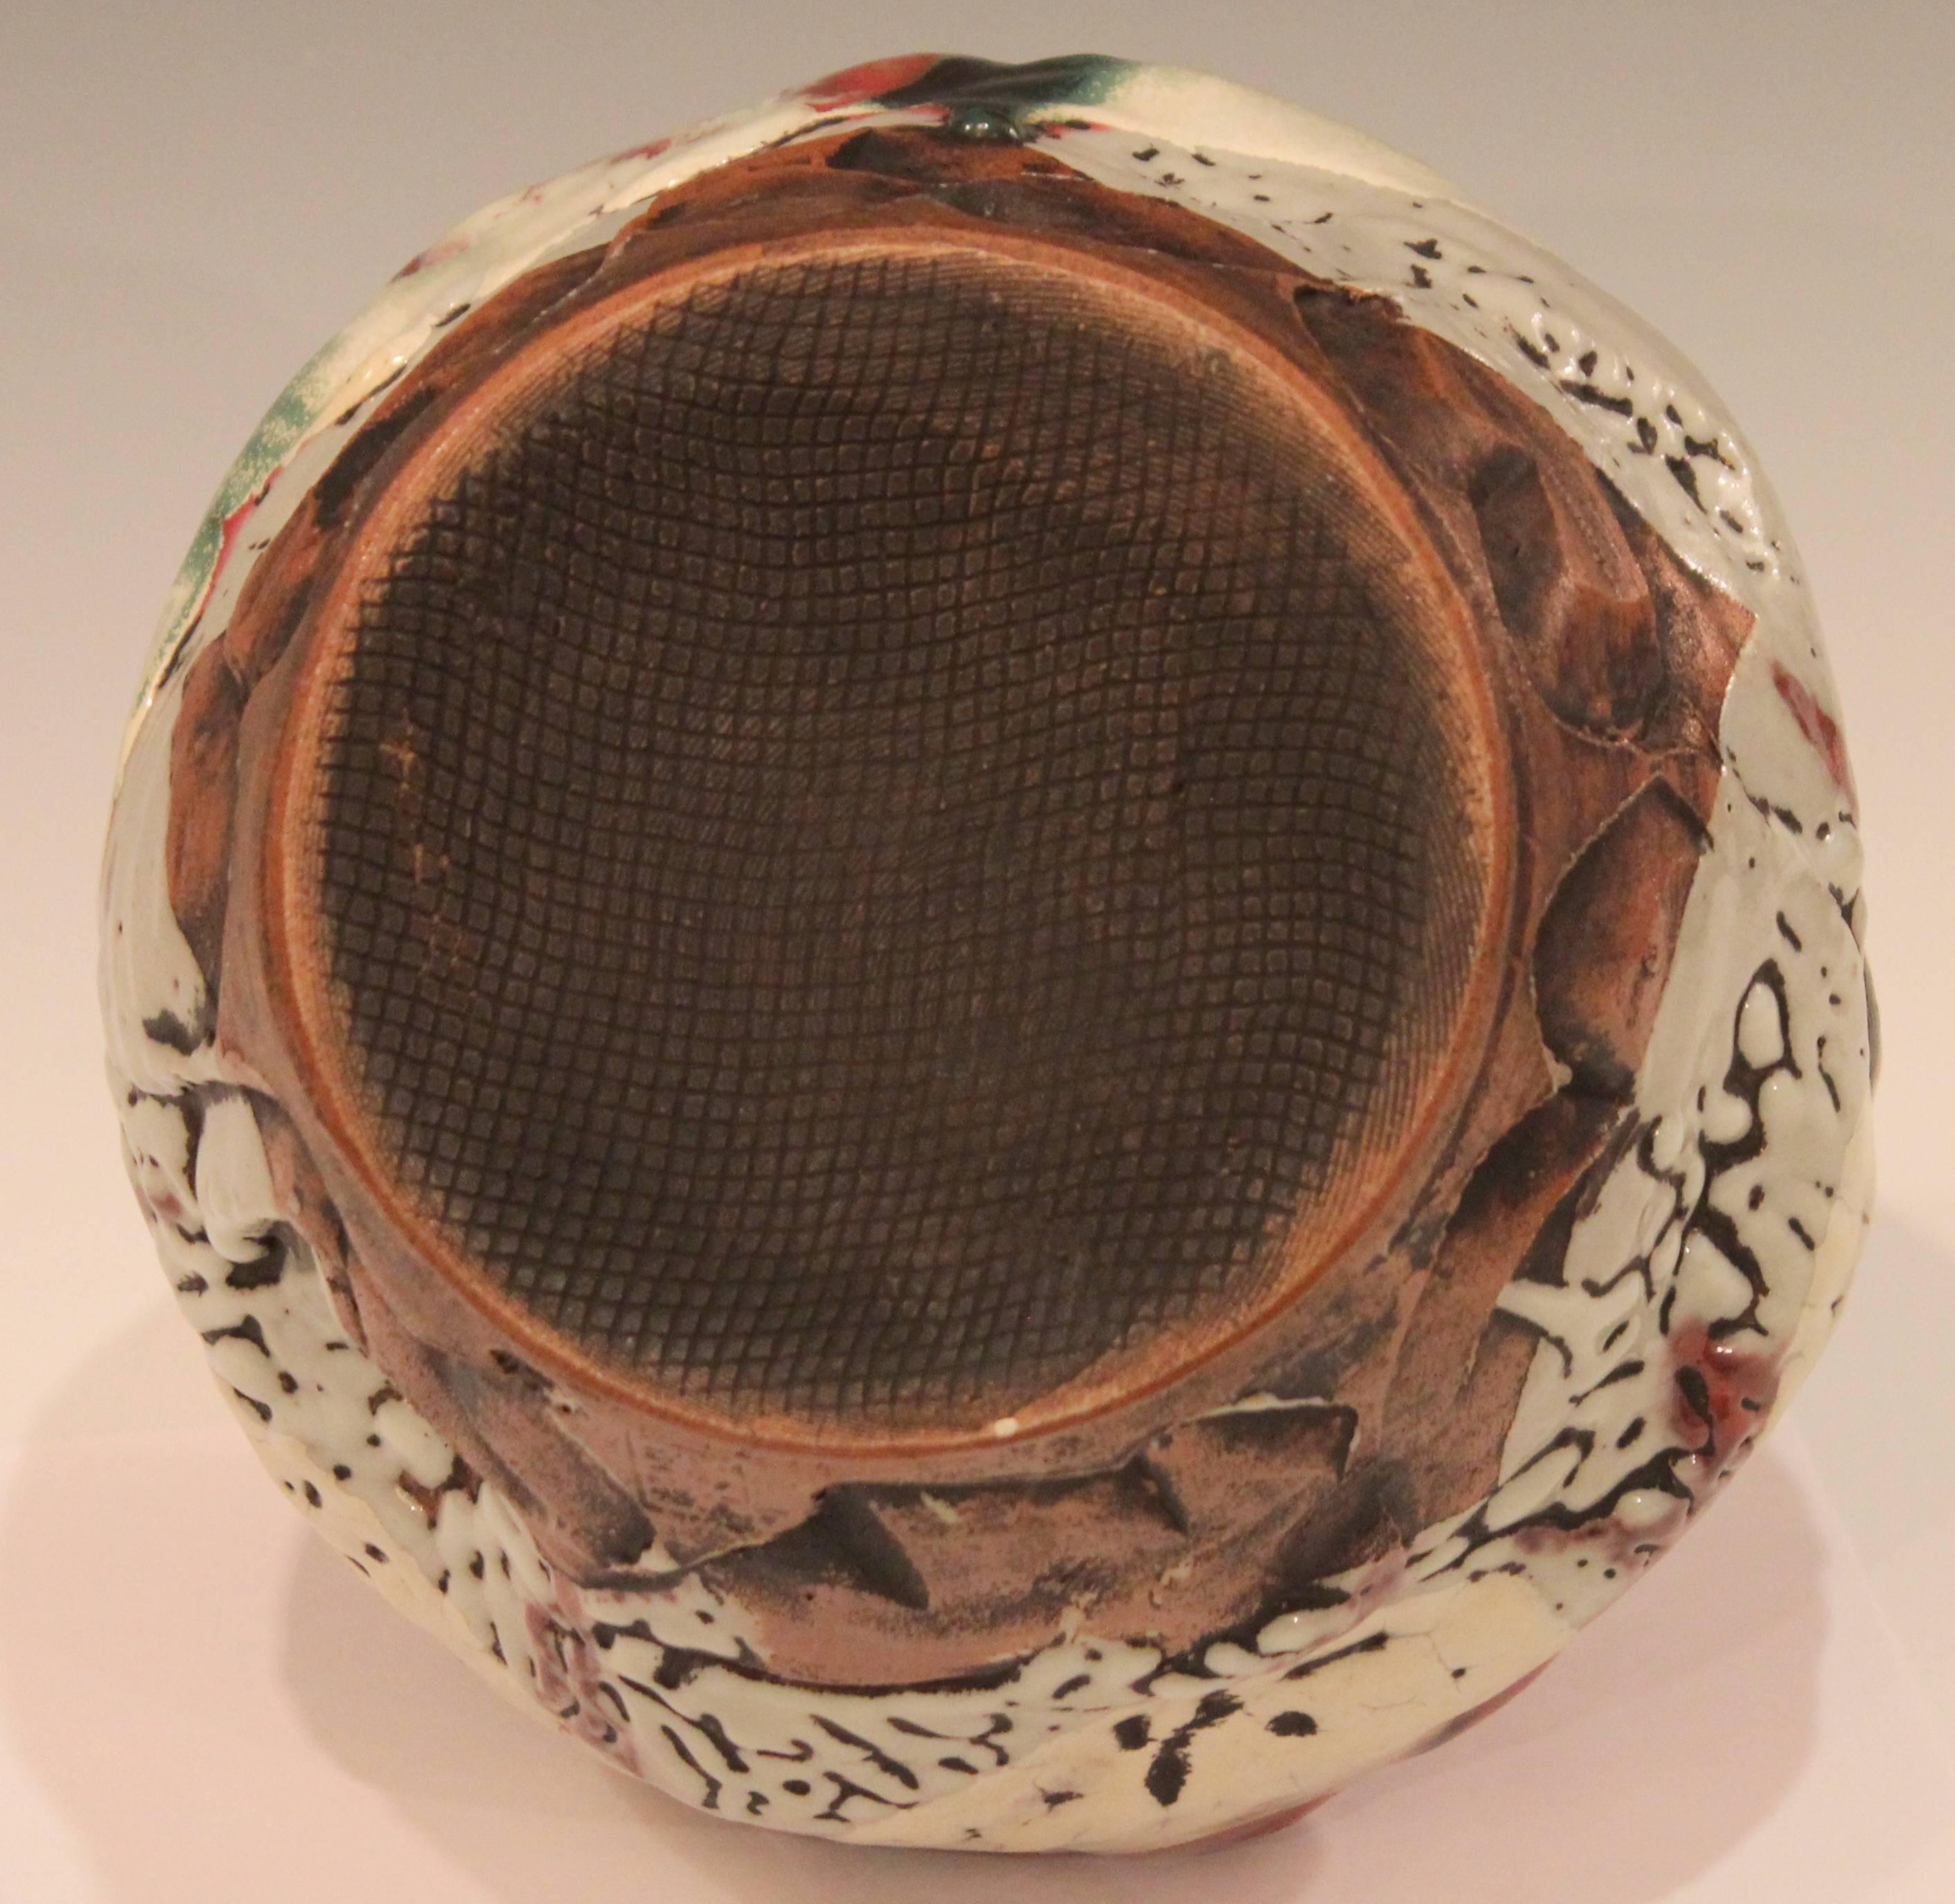 Turned Awaji Pottery Manipulated Jar with Crawling Lava Glaze